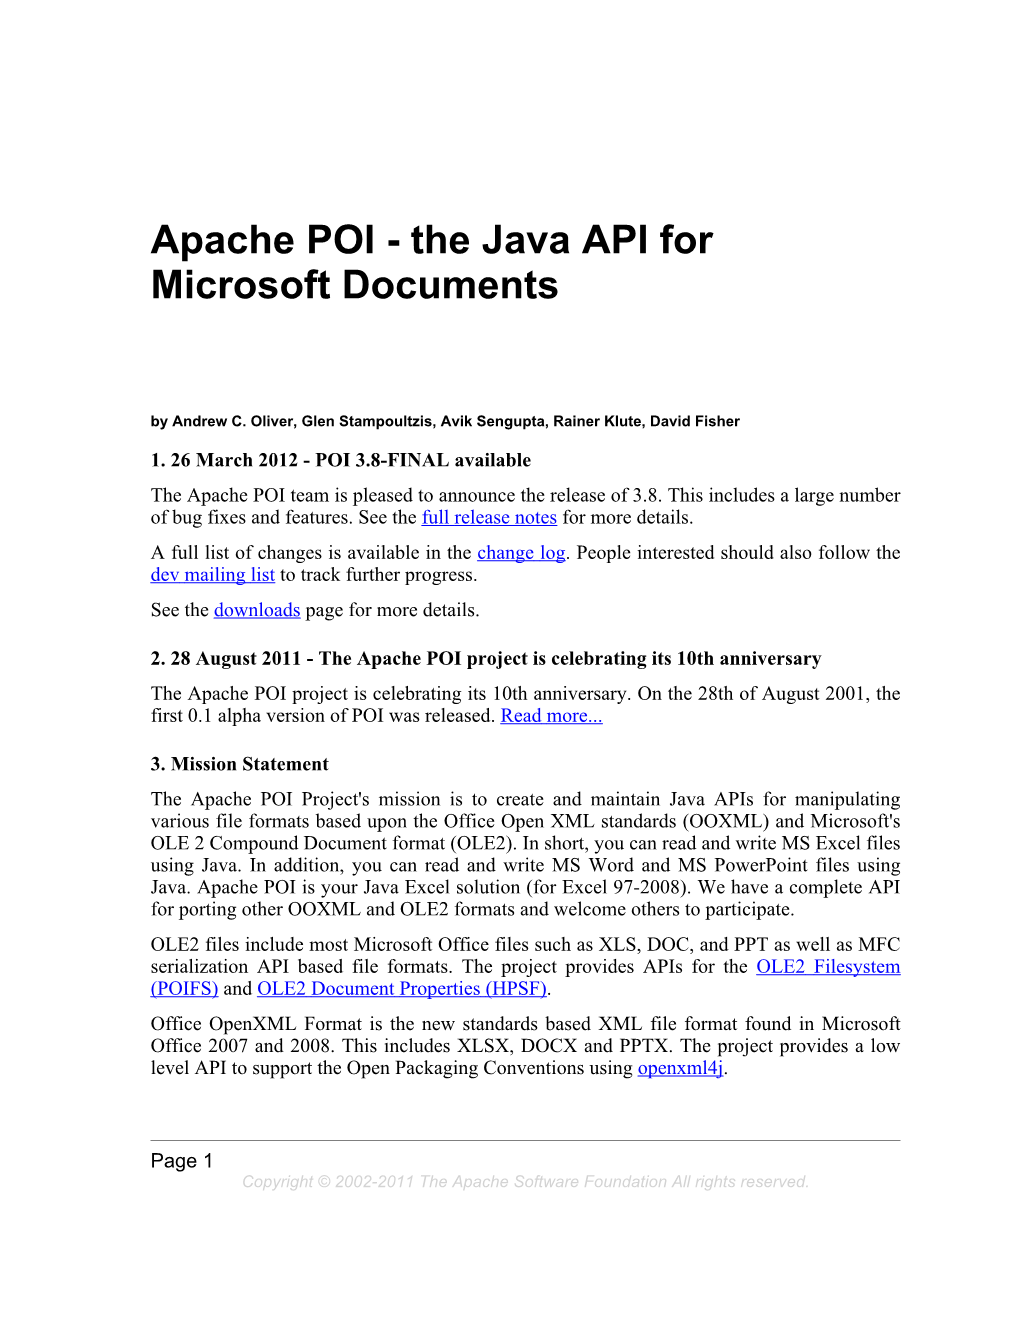 Apache POI - the Java API for Microsoft Documents